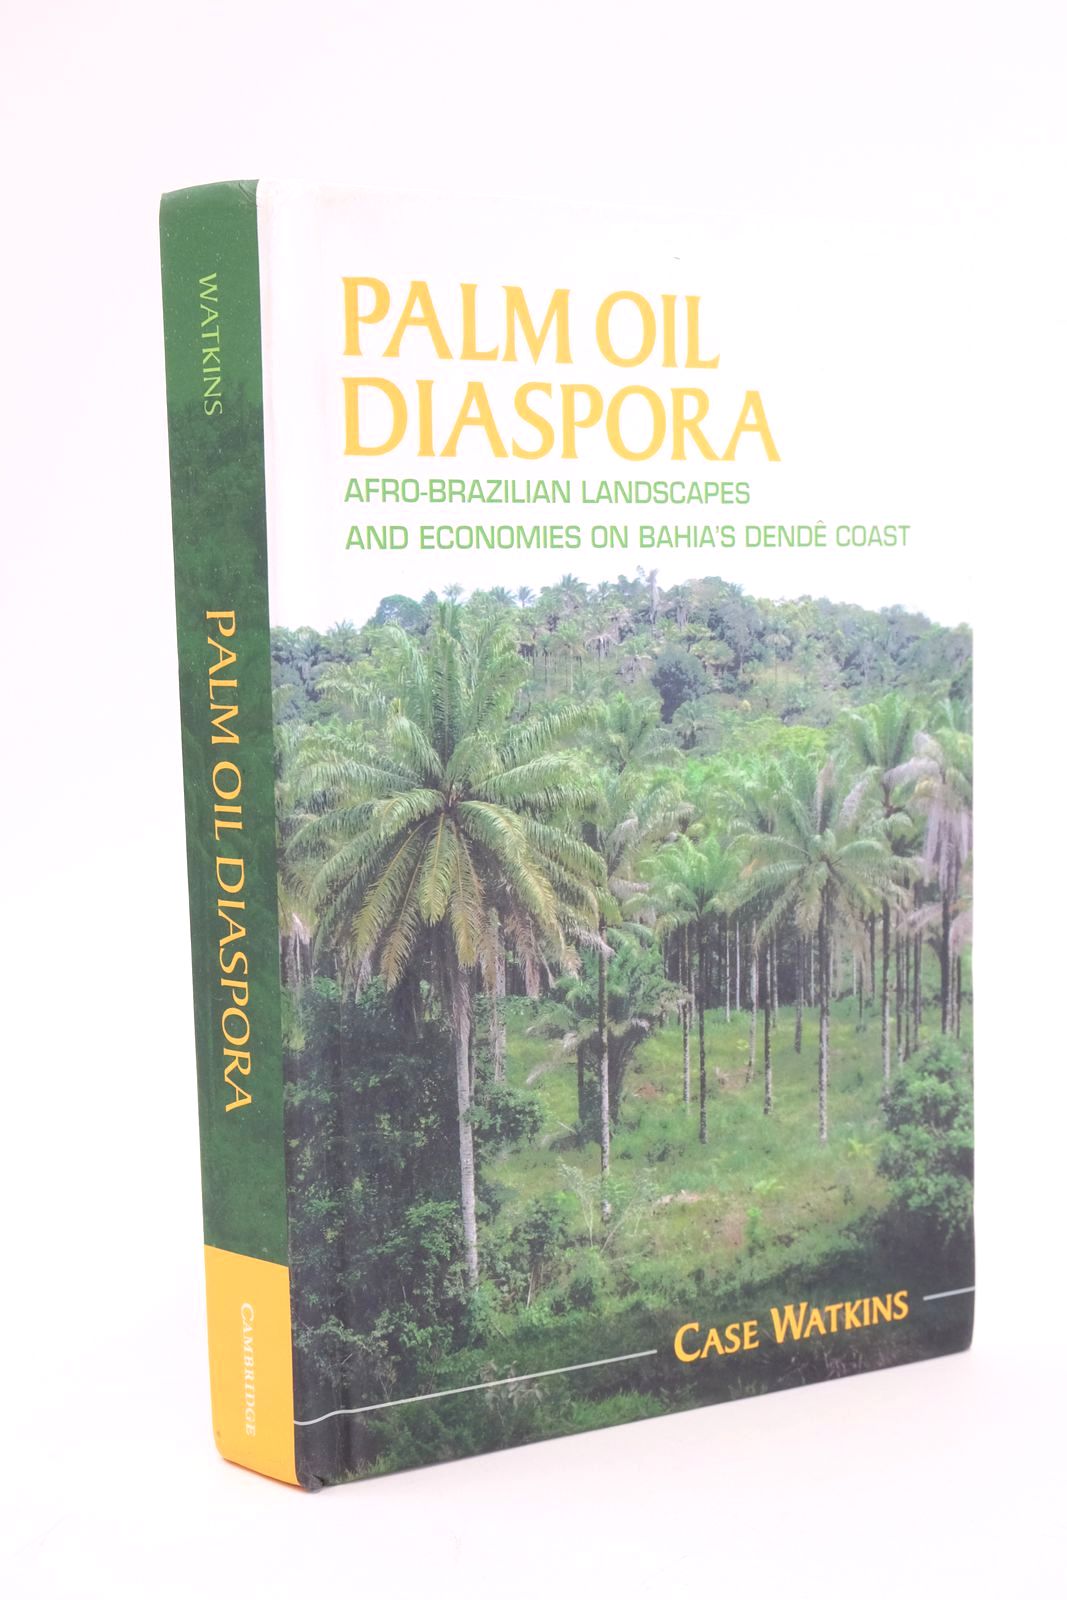 Photo of PALM OIL DIASPORA: AFRO-BRAZILIAN LANDSCAPES AND ECONOMIES ON BAHIA'S DENDE COAST- Stock Number: 1324951